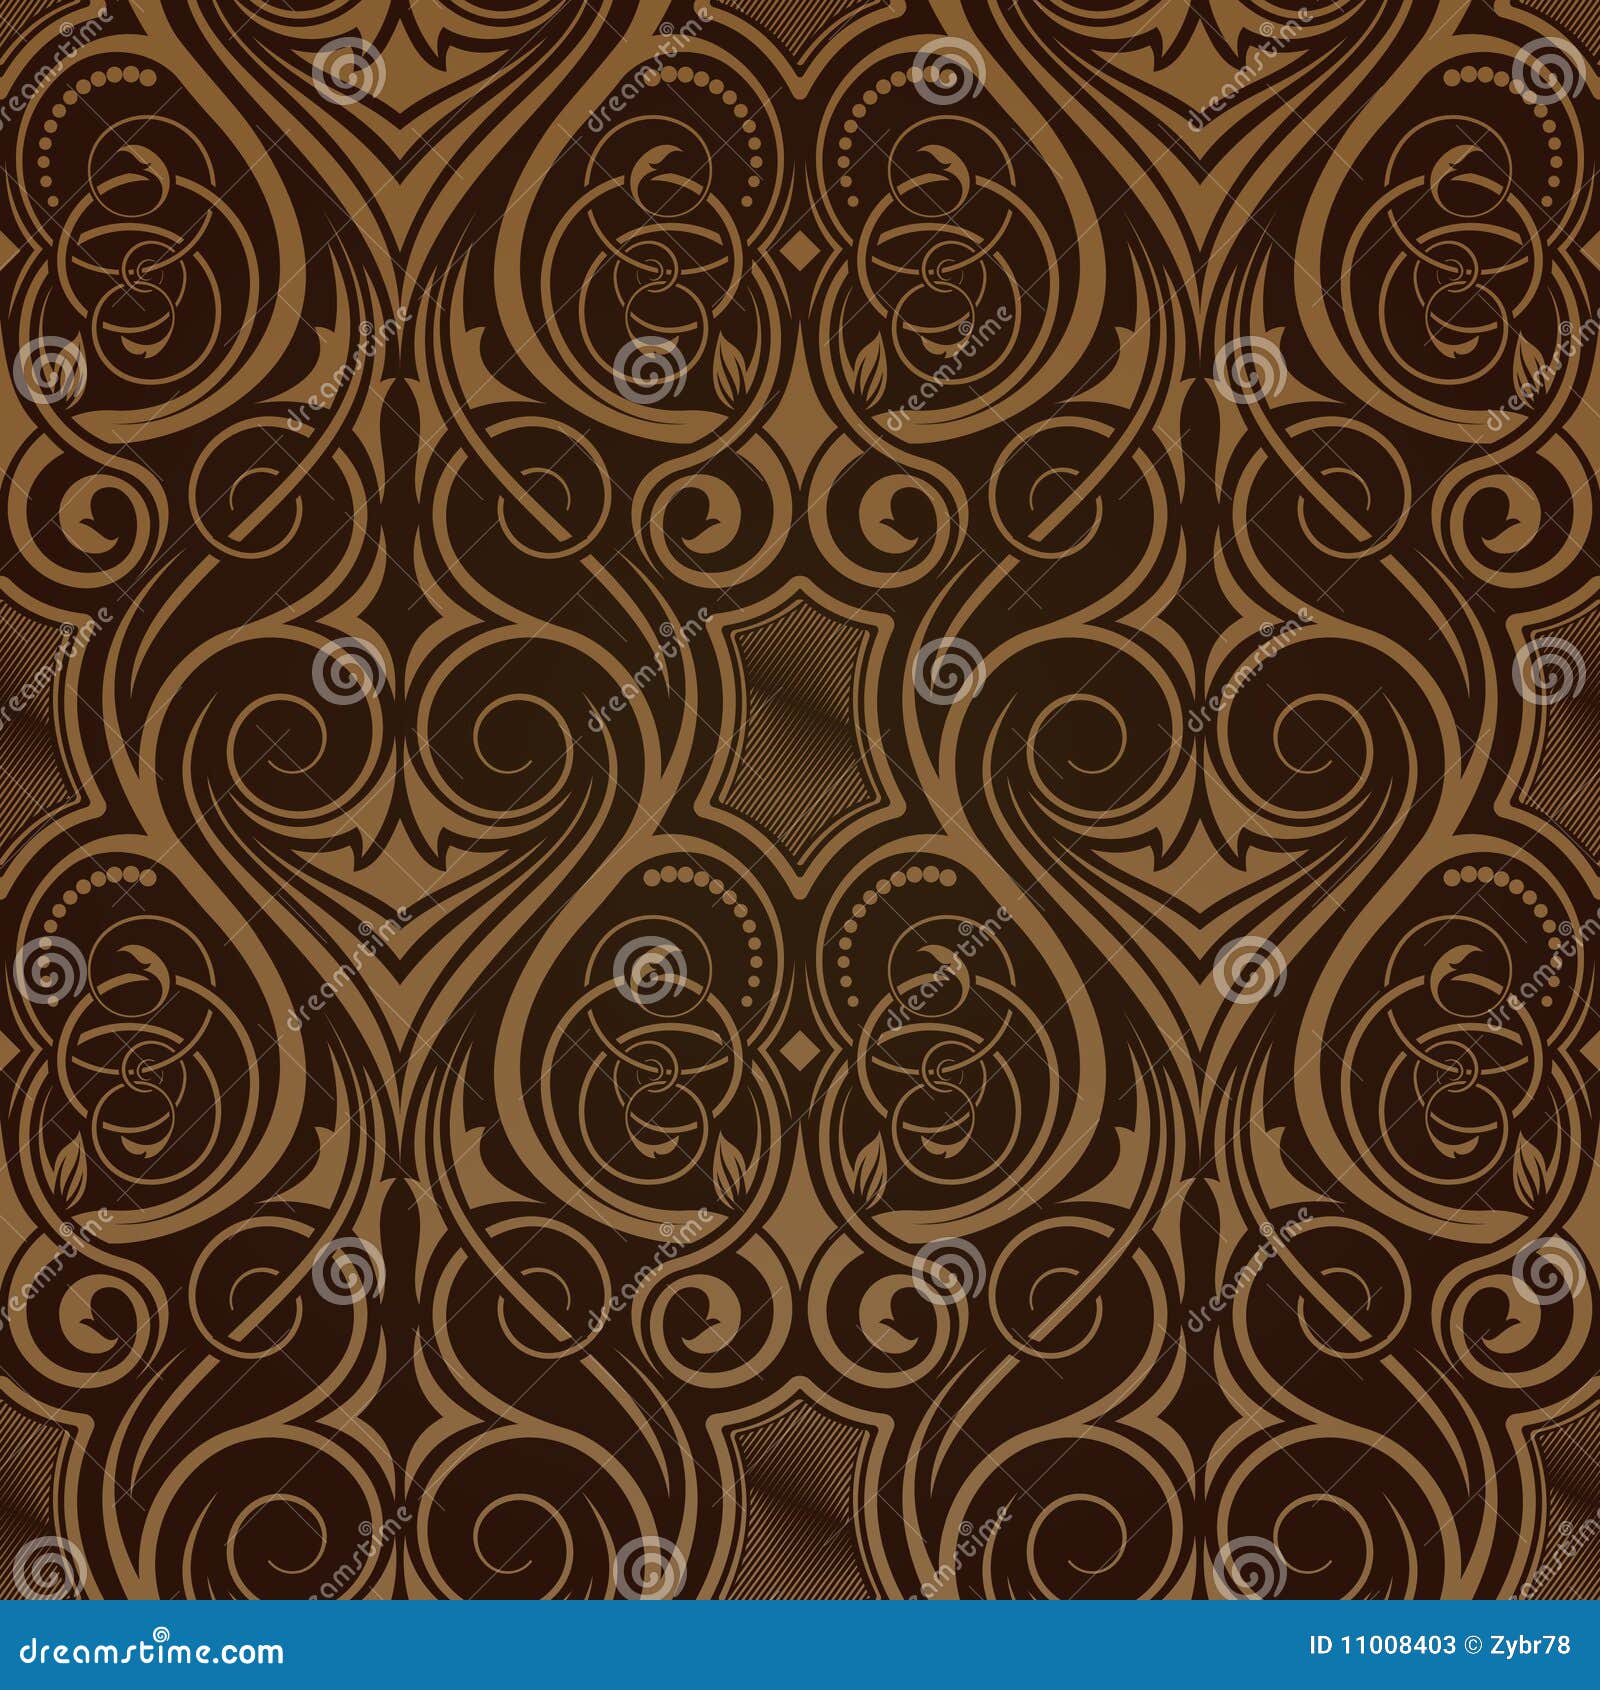 Brown seamless wallpaper stock vector. Illustration of repeating - 11008403